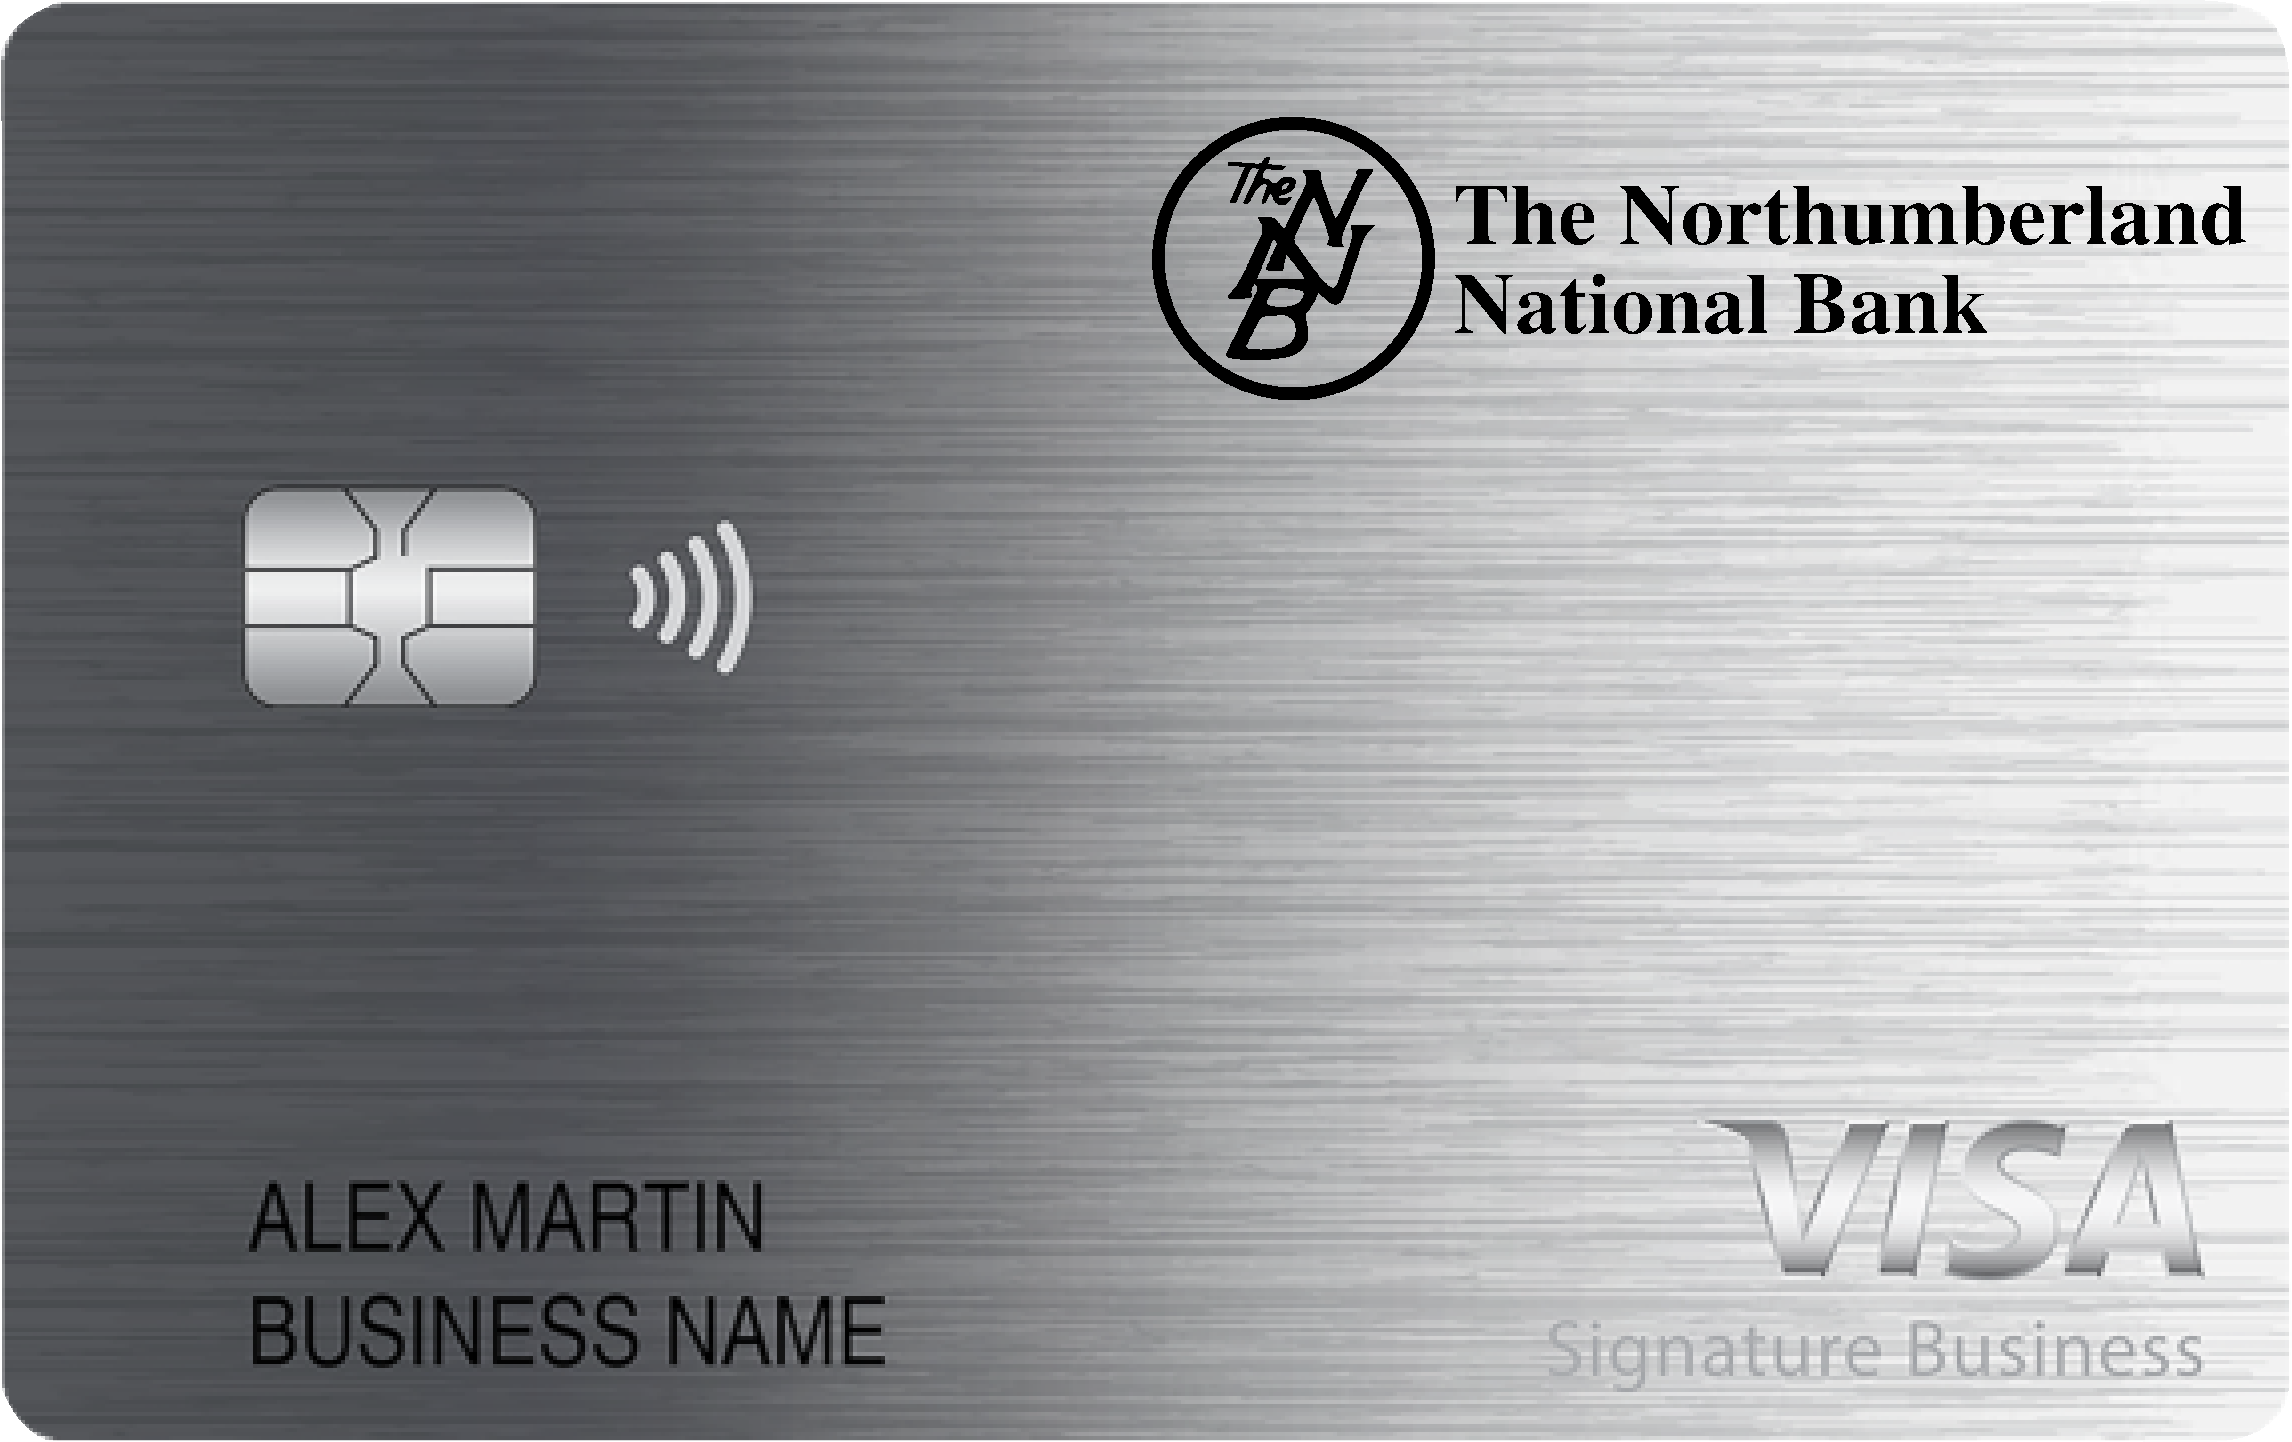 The Northumberland National Bank Smart Business Rewards Card